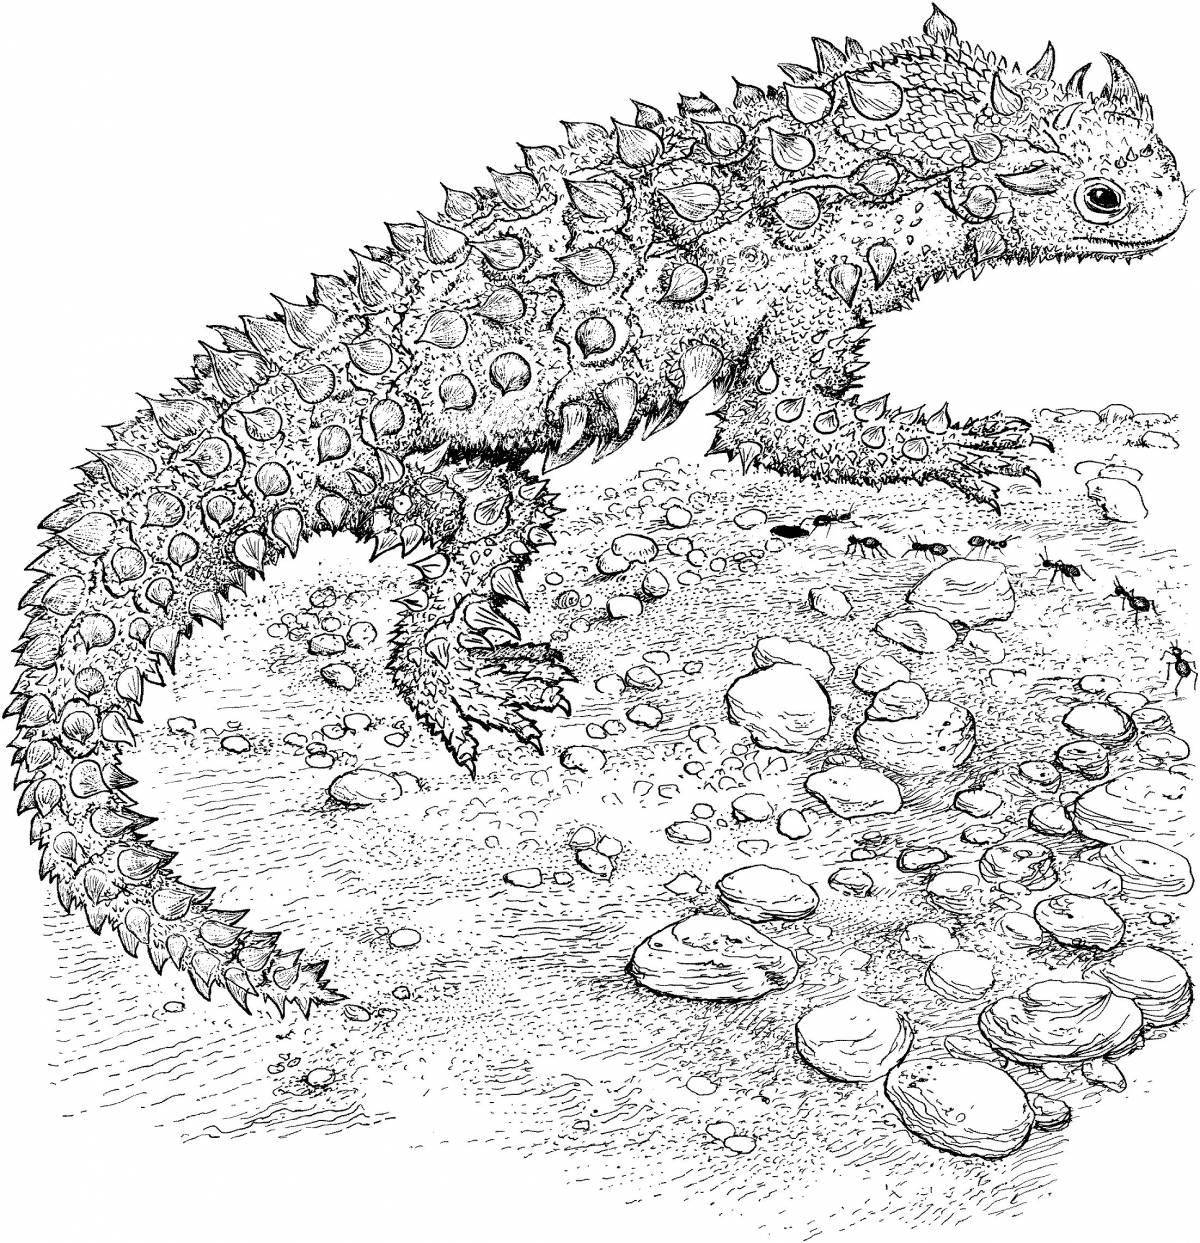 Delightful crocodile antistress coloring book